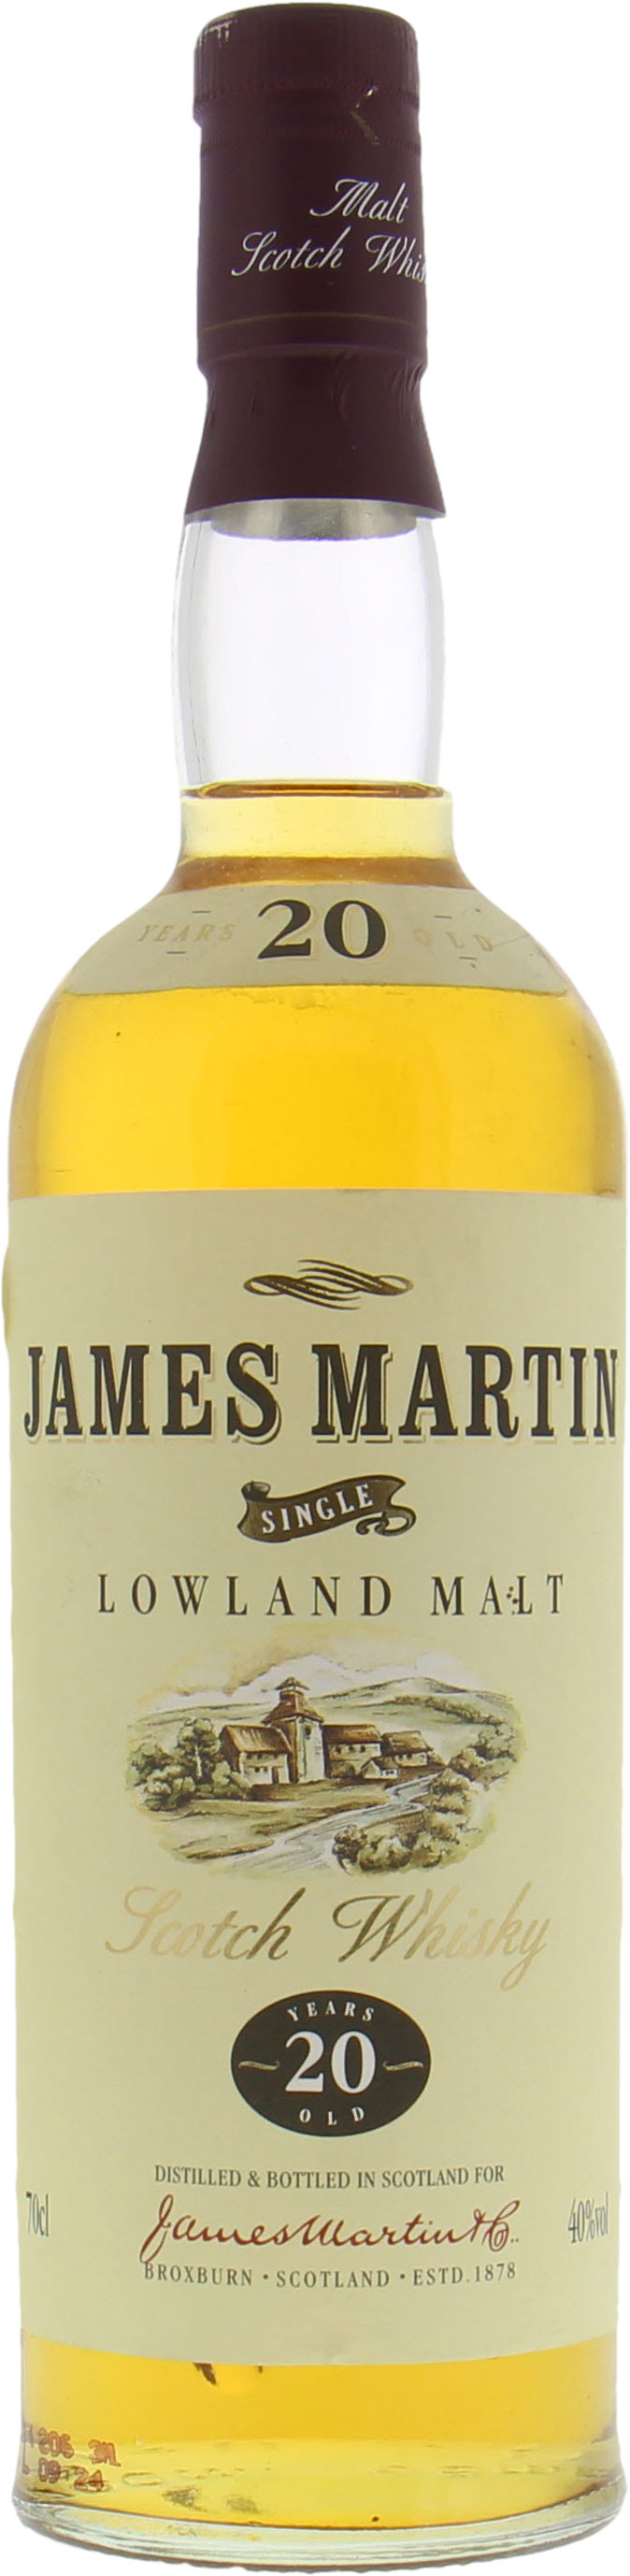 James Martin & Co. Ltd. (JM&C) - 20 Years Old Single Lowland Malt Scotch Whisky 40% NV